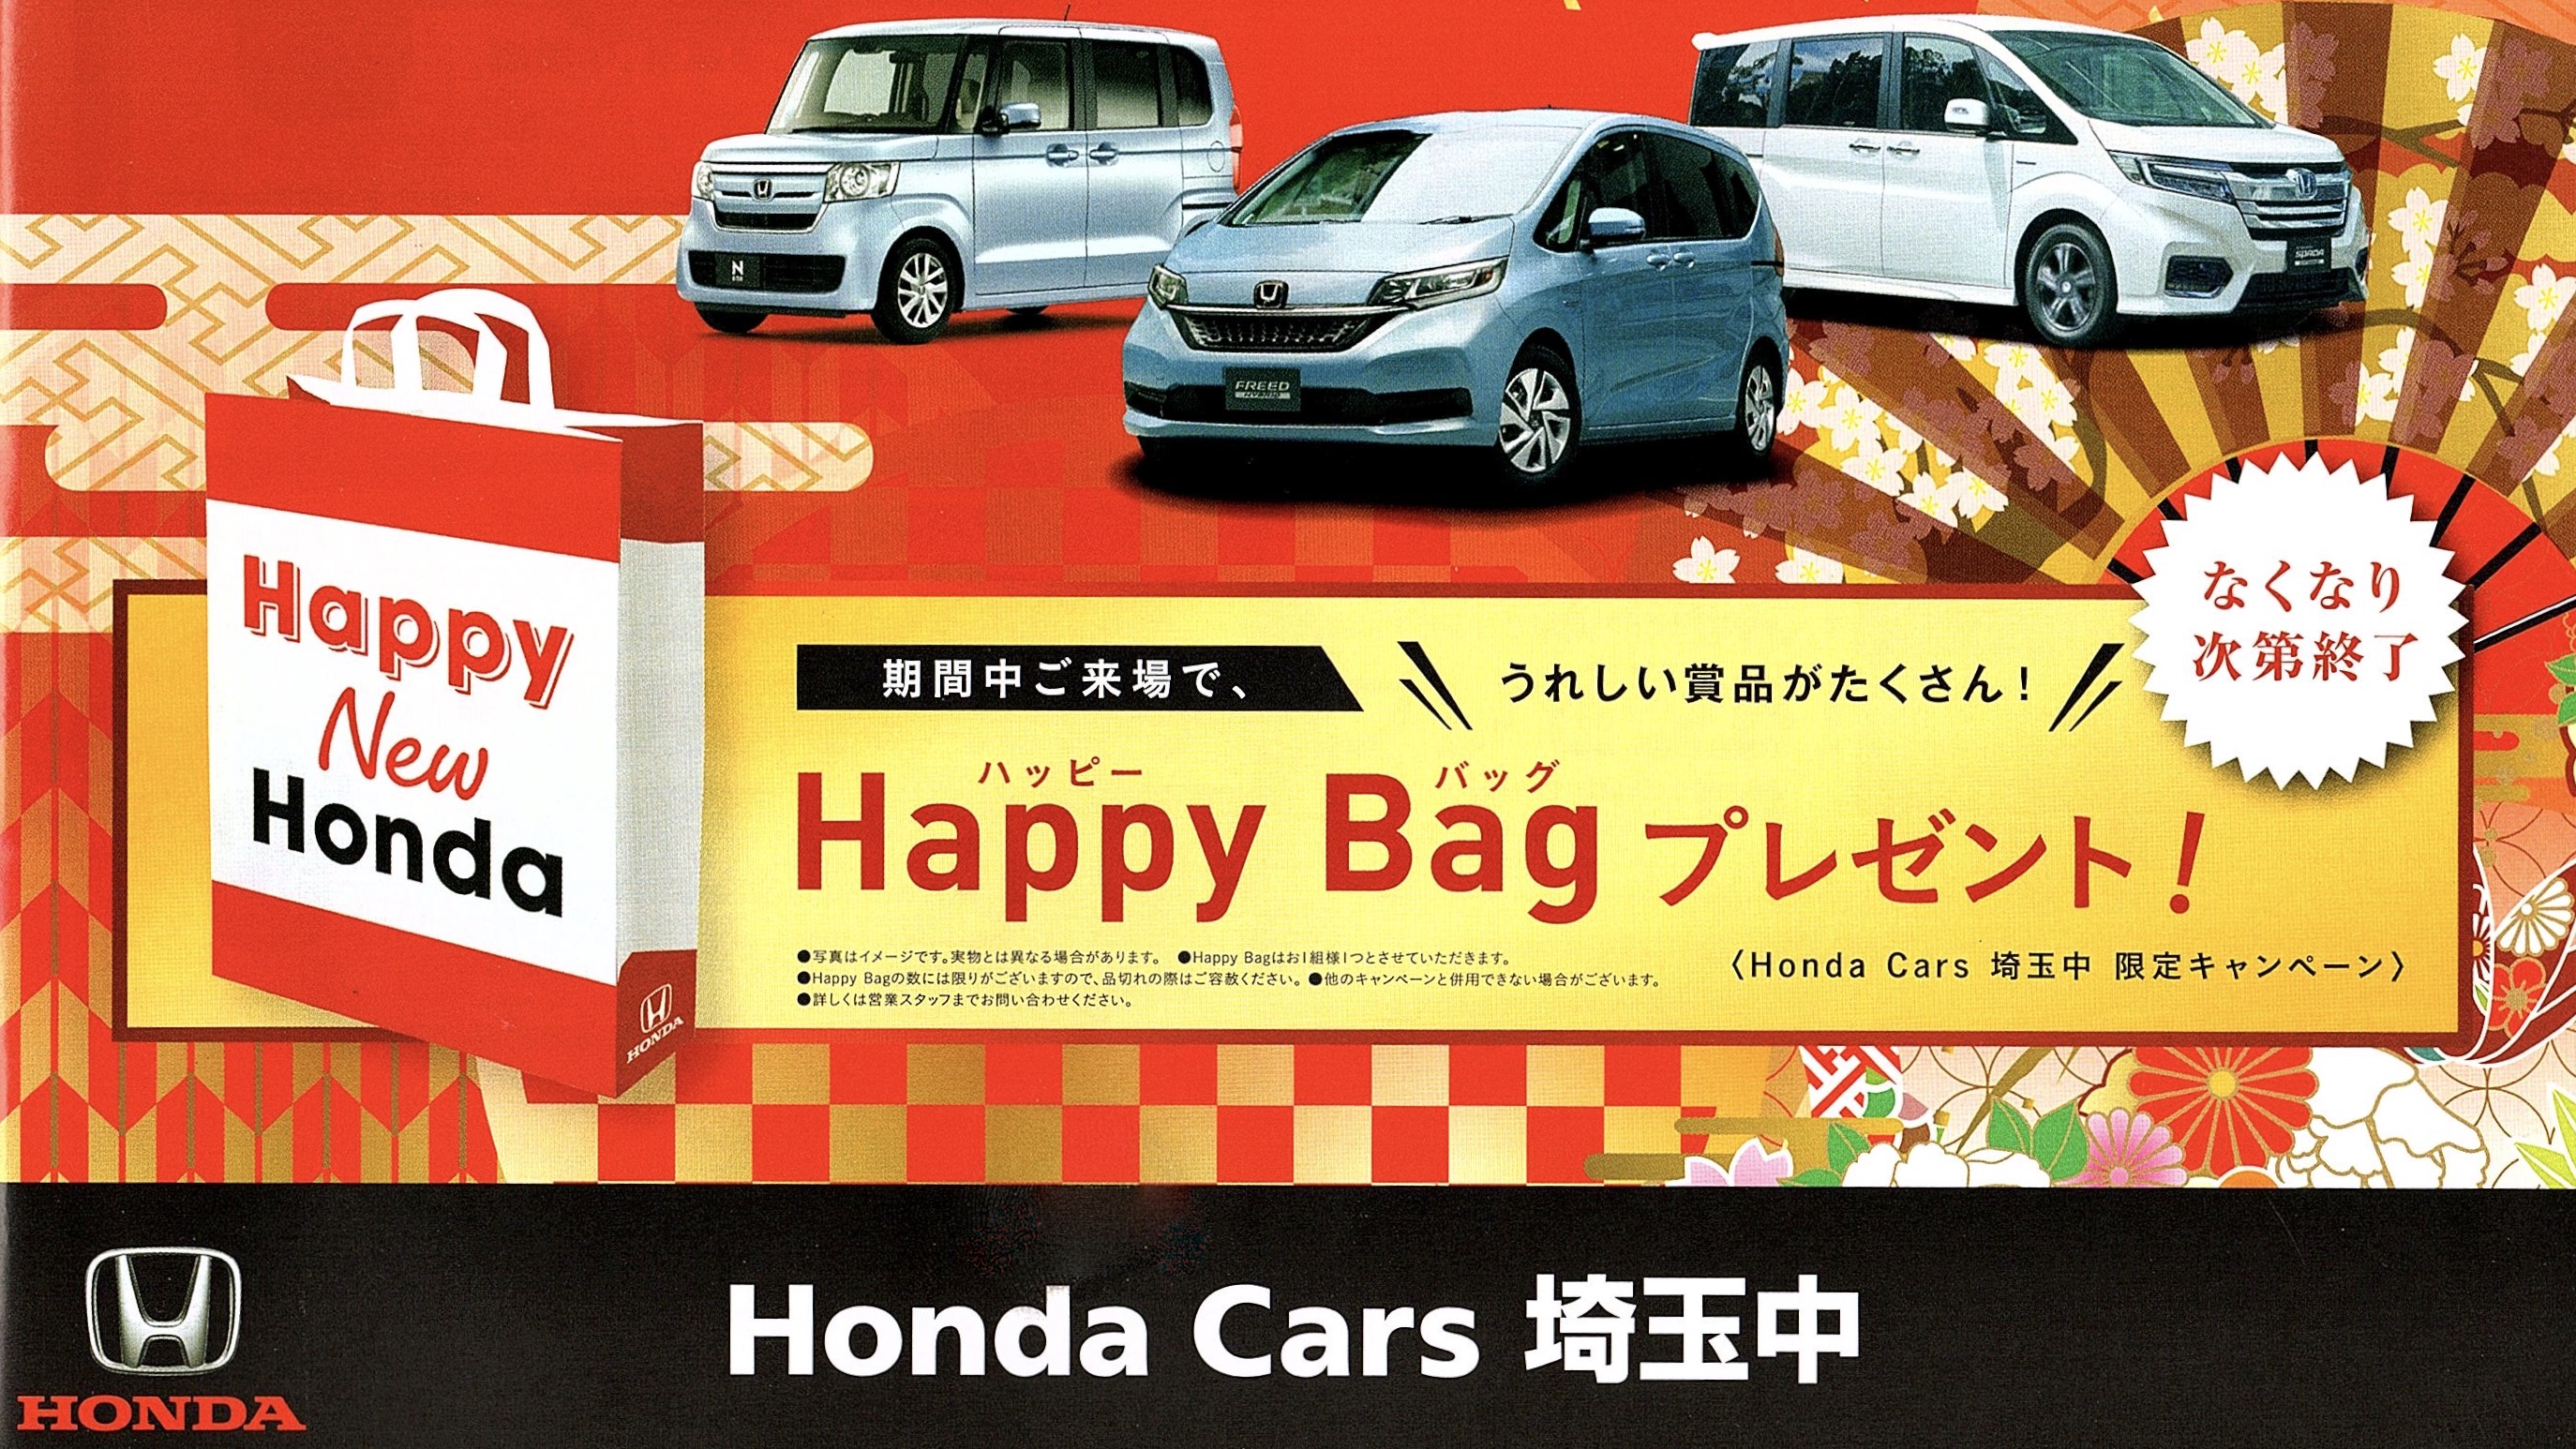 Happynewhonda 9days Honda Cars 埼玉中